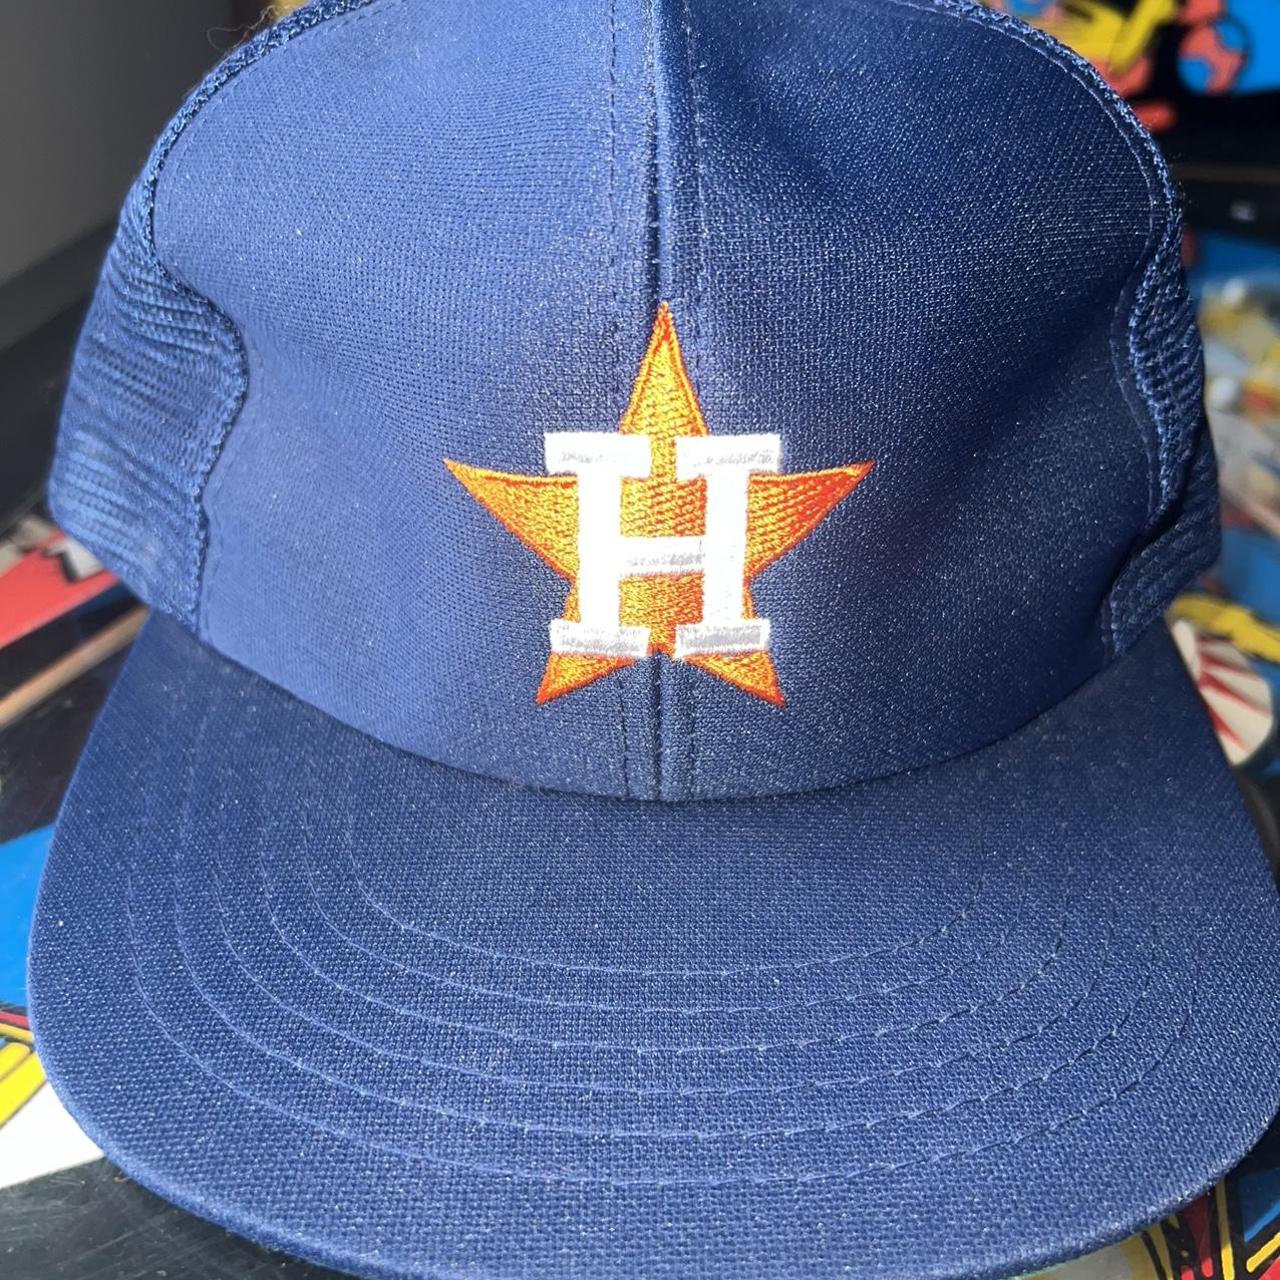 Houston Astros Vintage Snapback